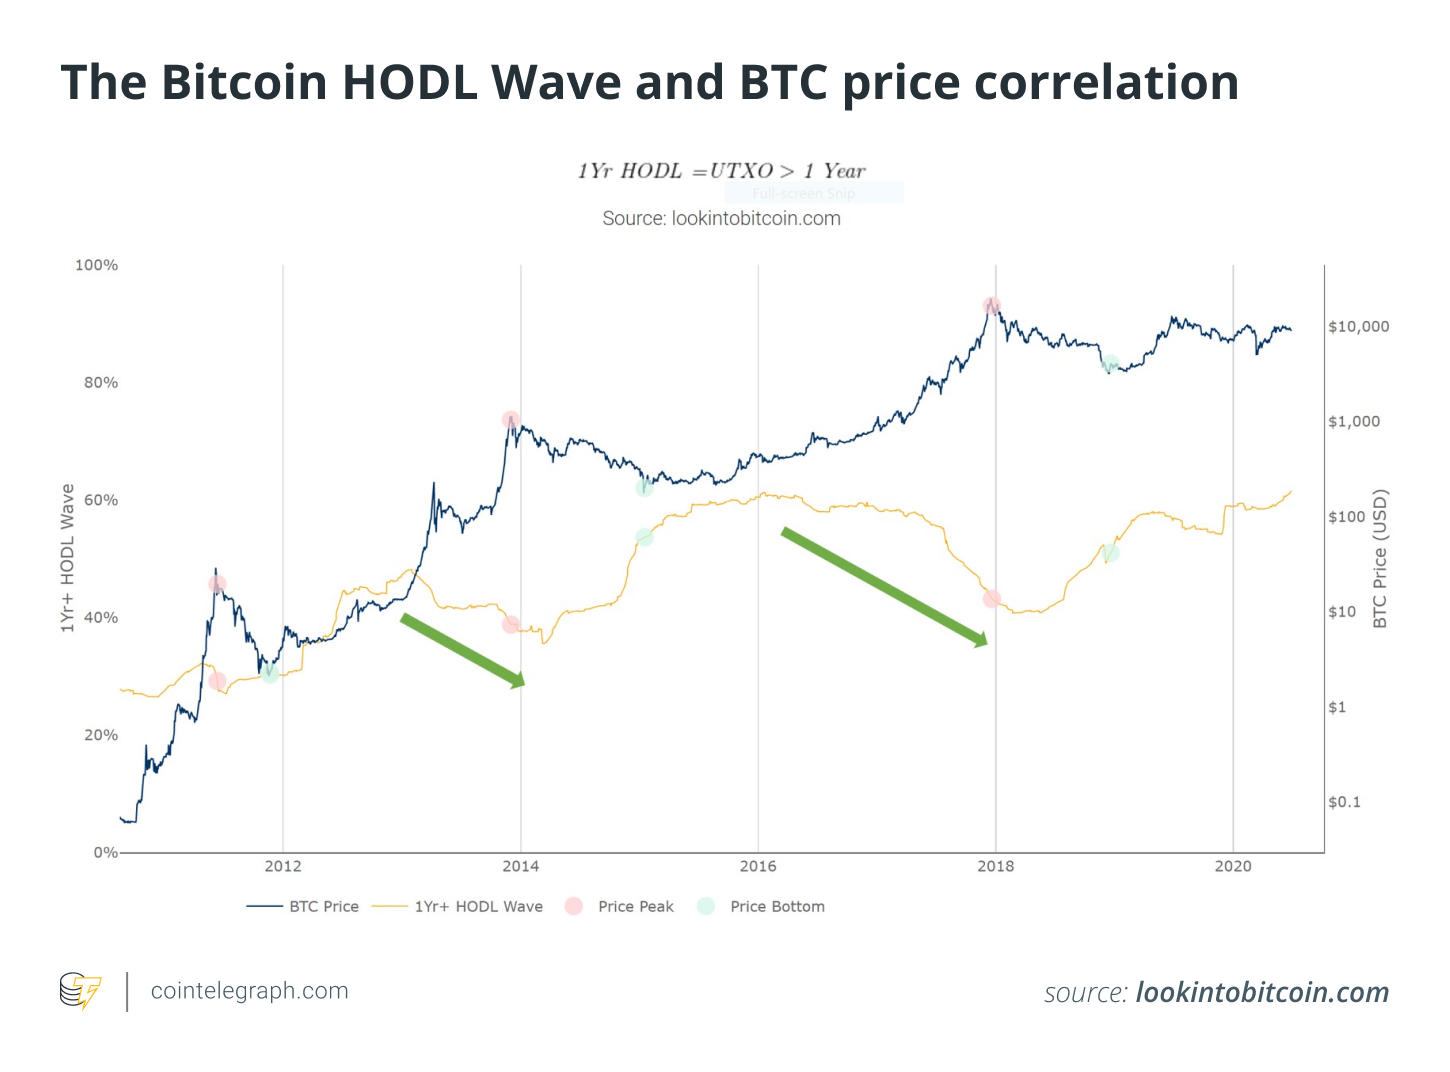 The Bitcoin HODL Wave and BTC price correlation